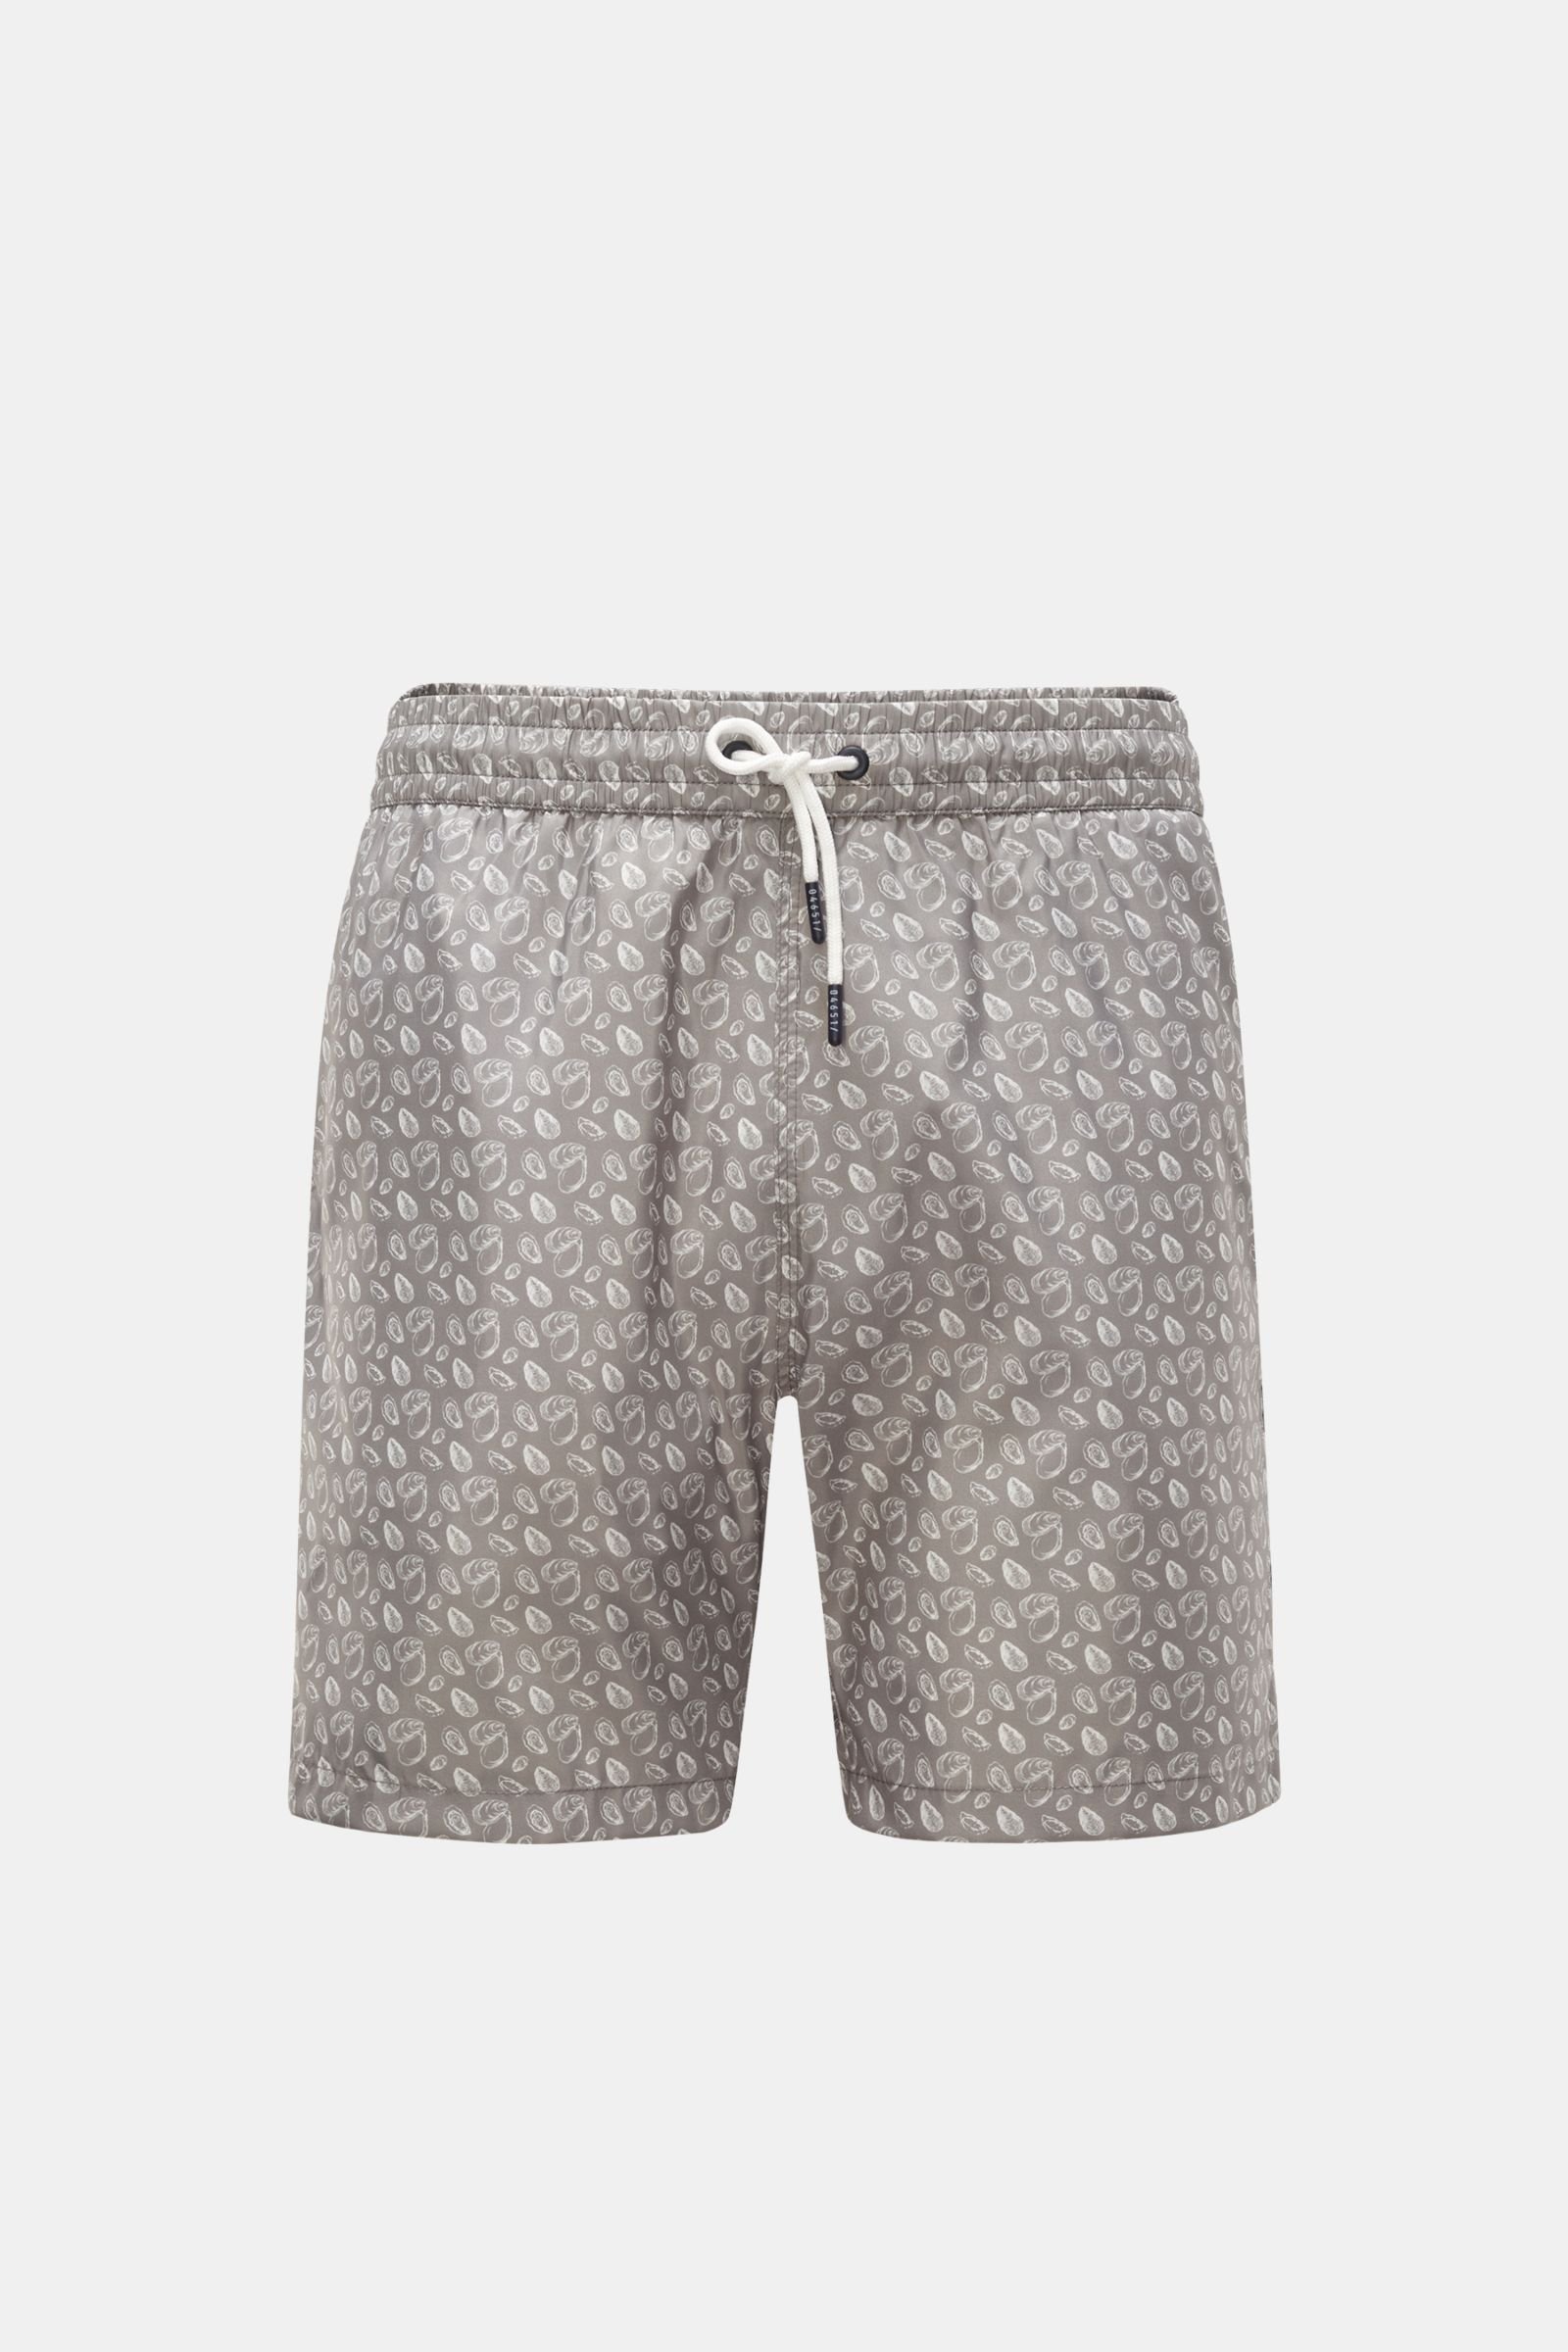 Swim shorts grey patterned